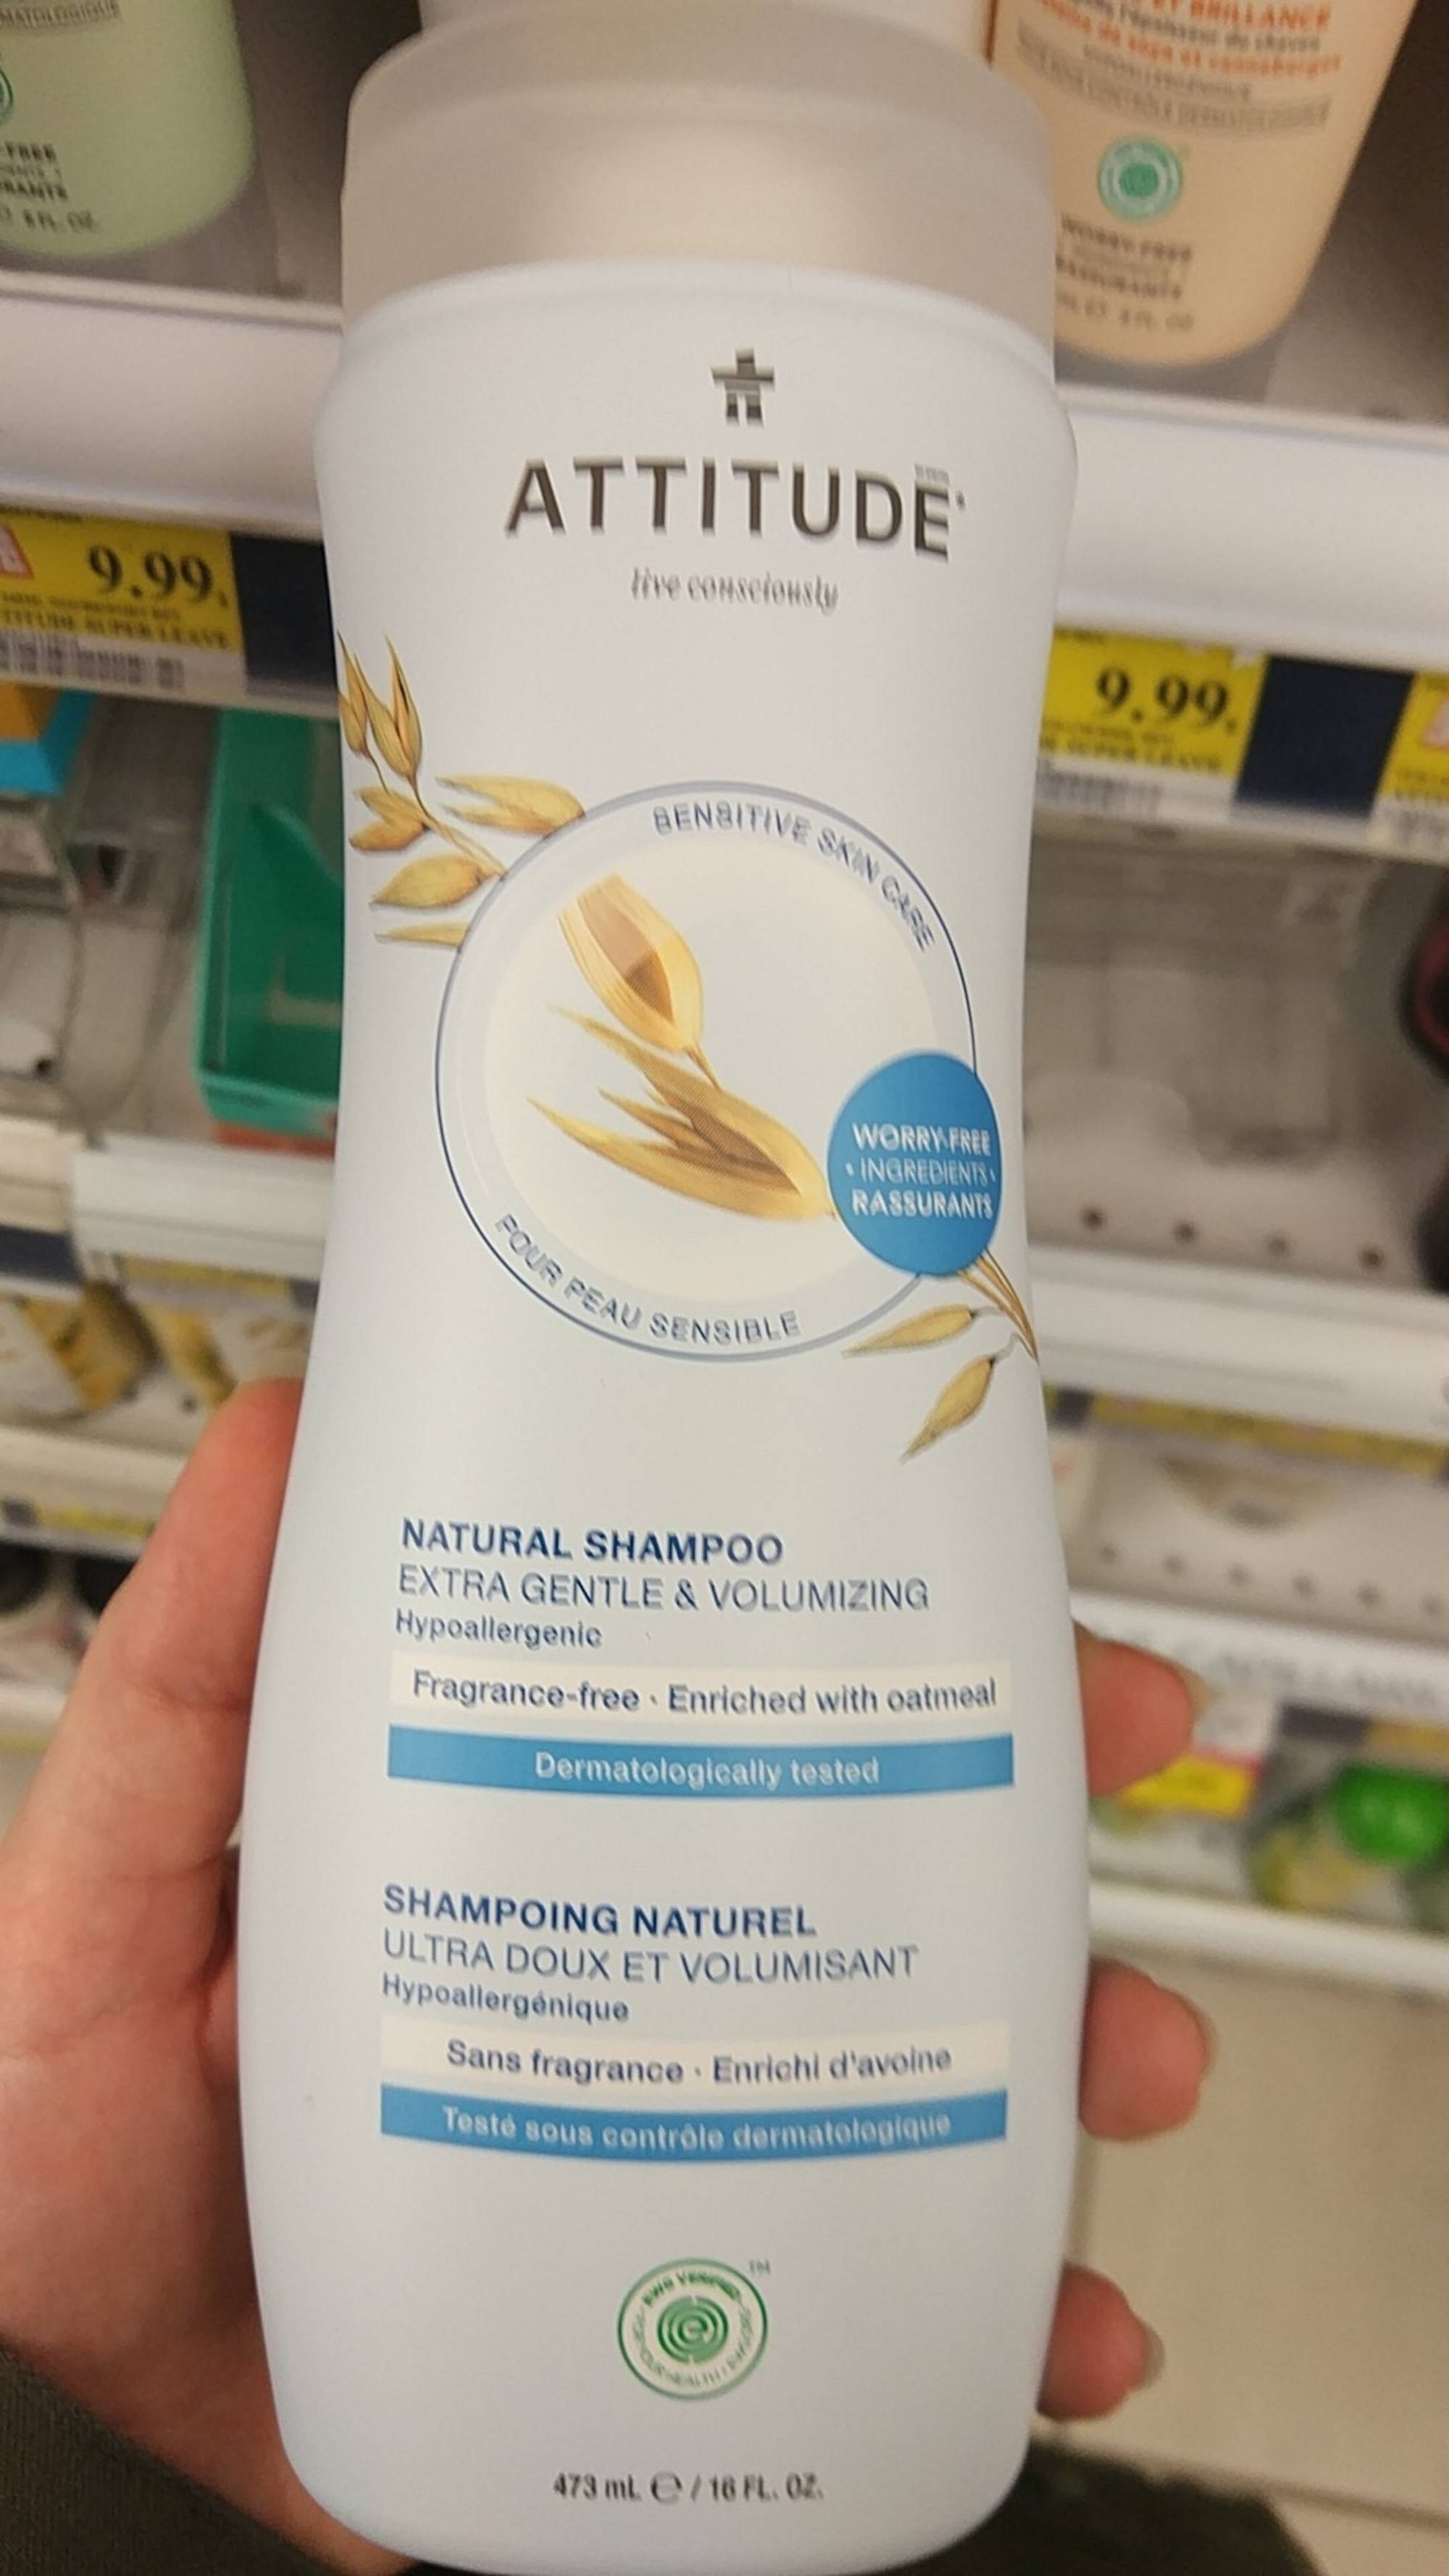 ATTITUDE - Shampooing naturel ultra doux et volumisant